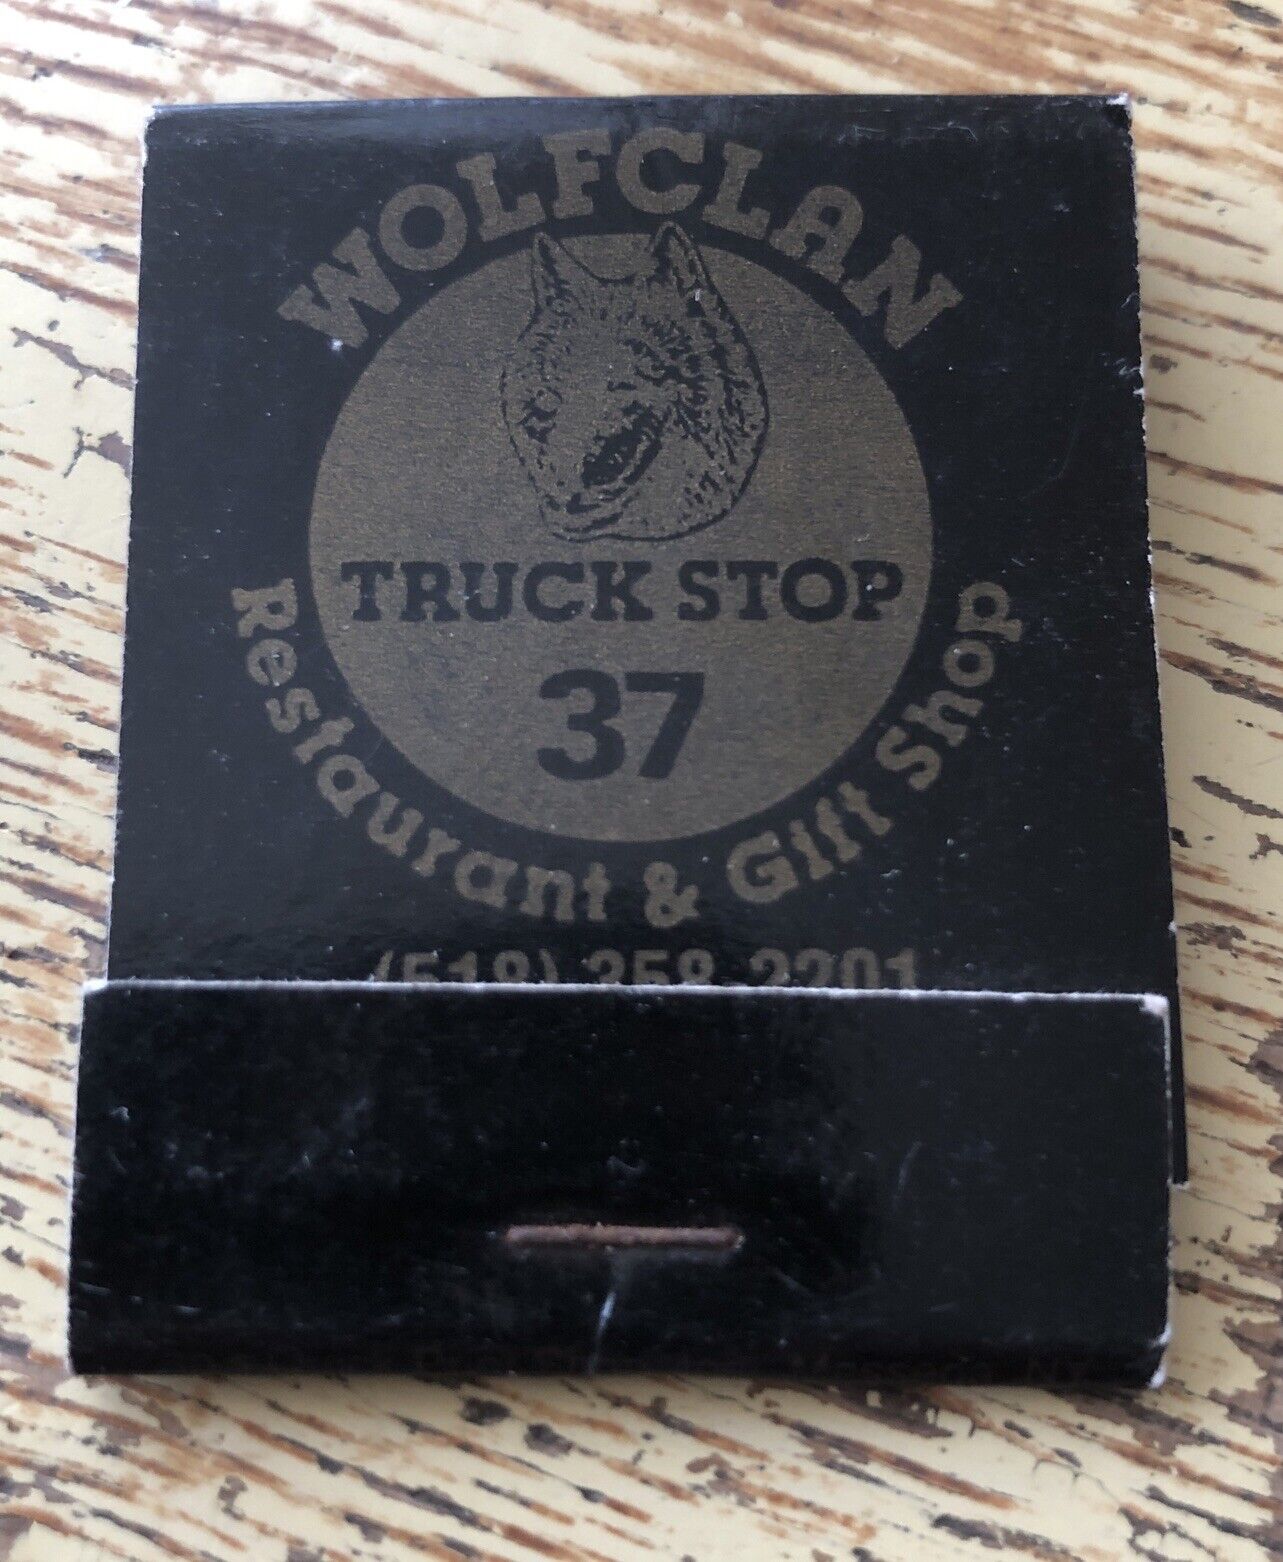 Wolf Clan Truck Stop 37 Restaurant & Gift Shop *Unstruck* Matchbook 70s-80s